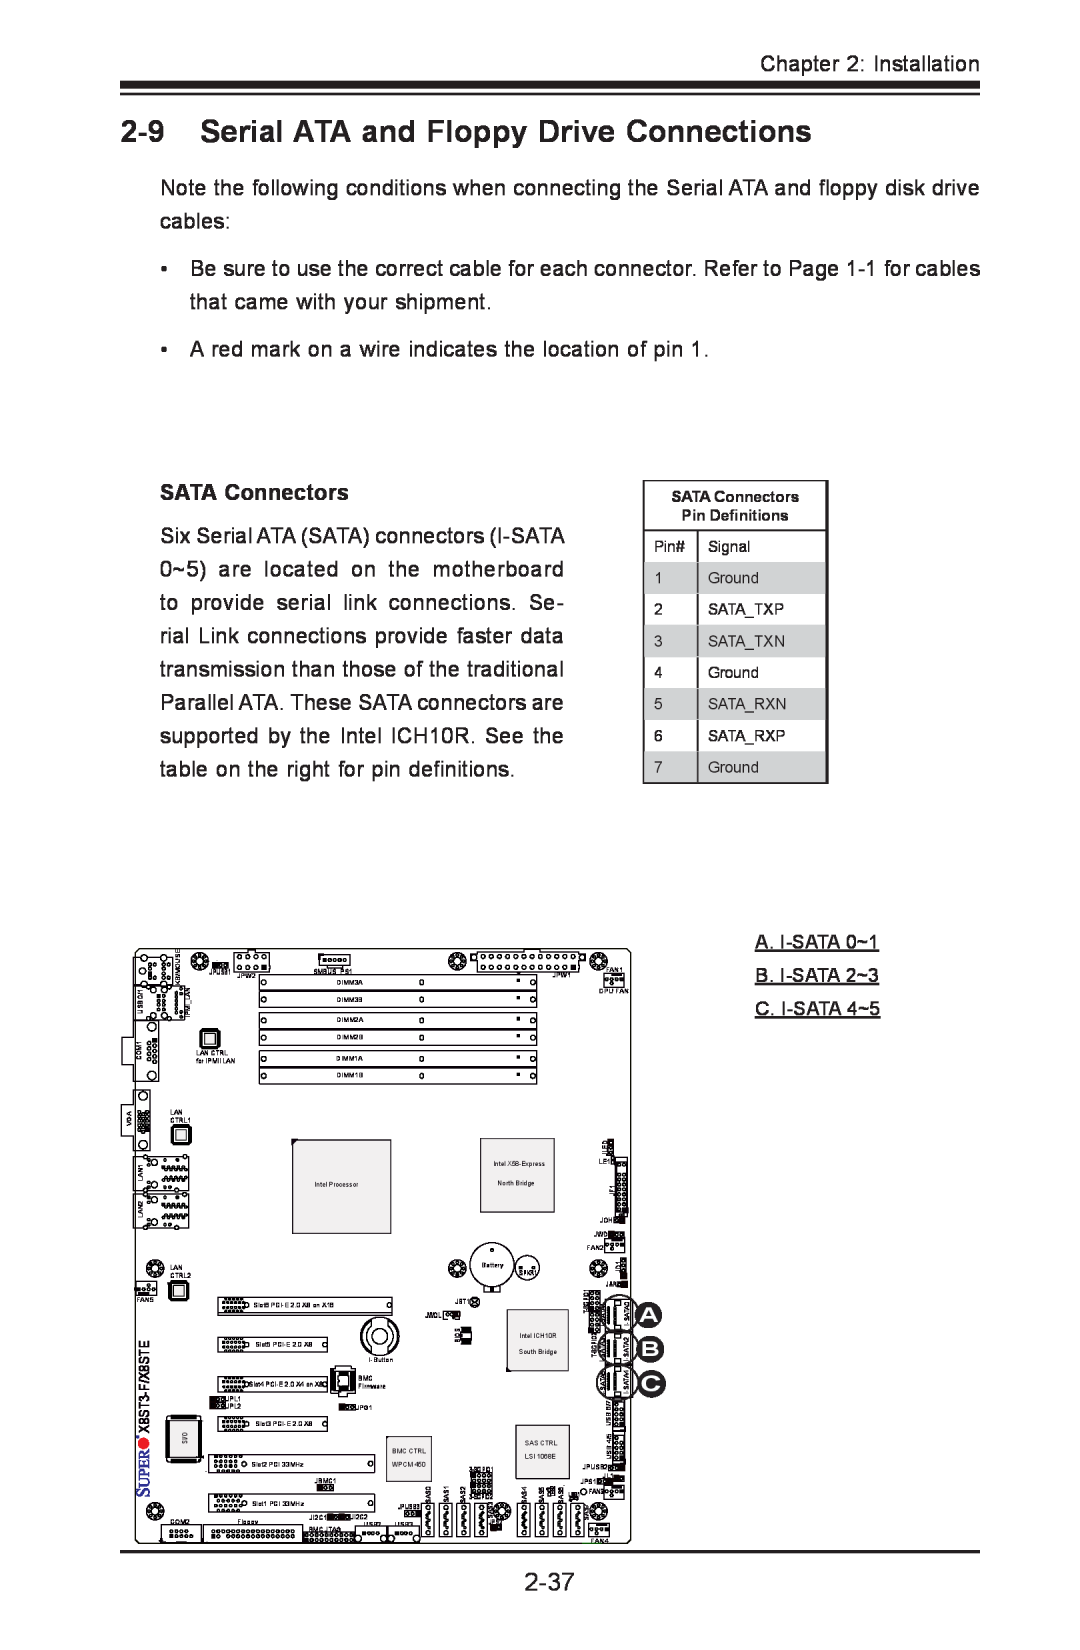 SUPER MICRO Computer X8STE Serial ATA and Floppy Drive Connections, 2-37, SATA Connectors, A. I-SATA 0~1, B. I-SATA 2~3 